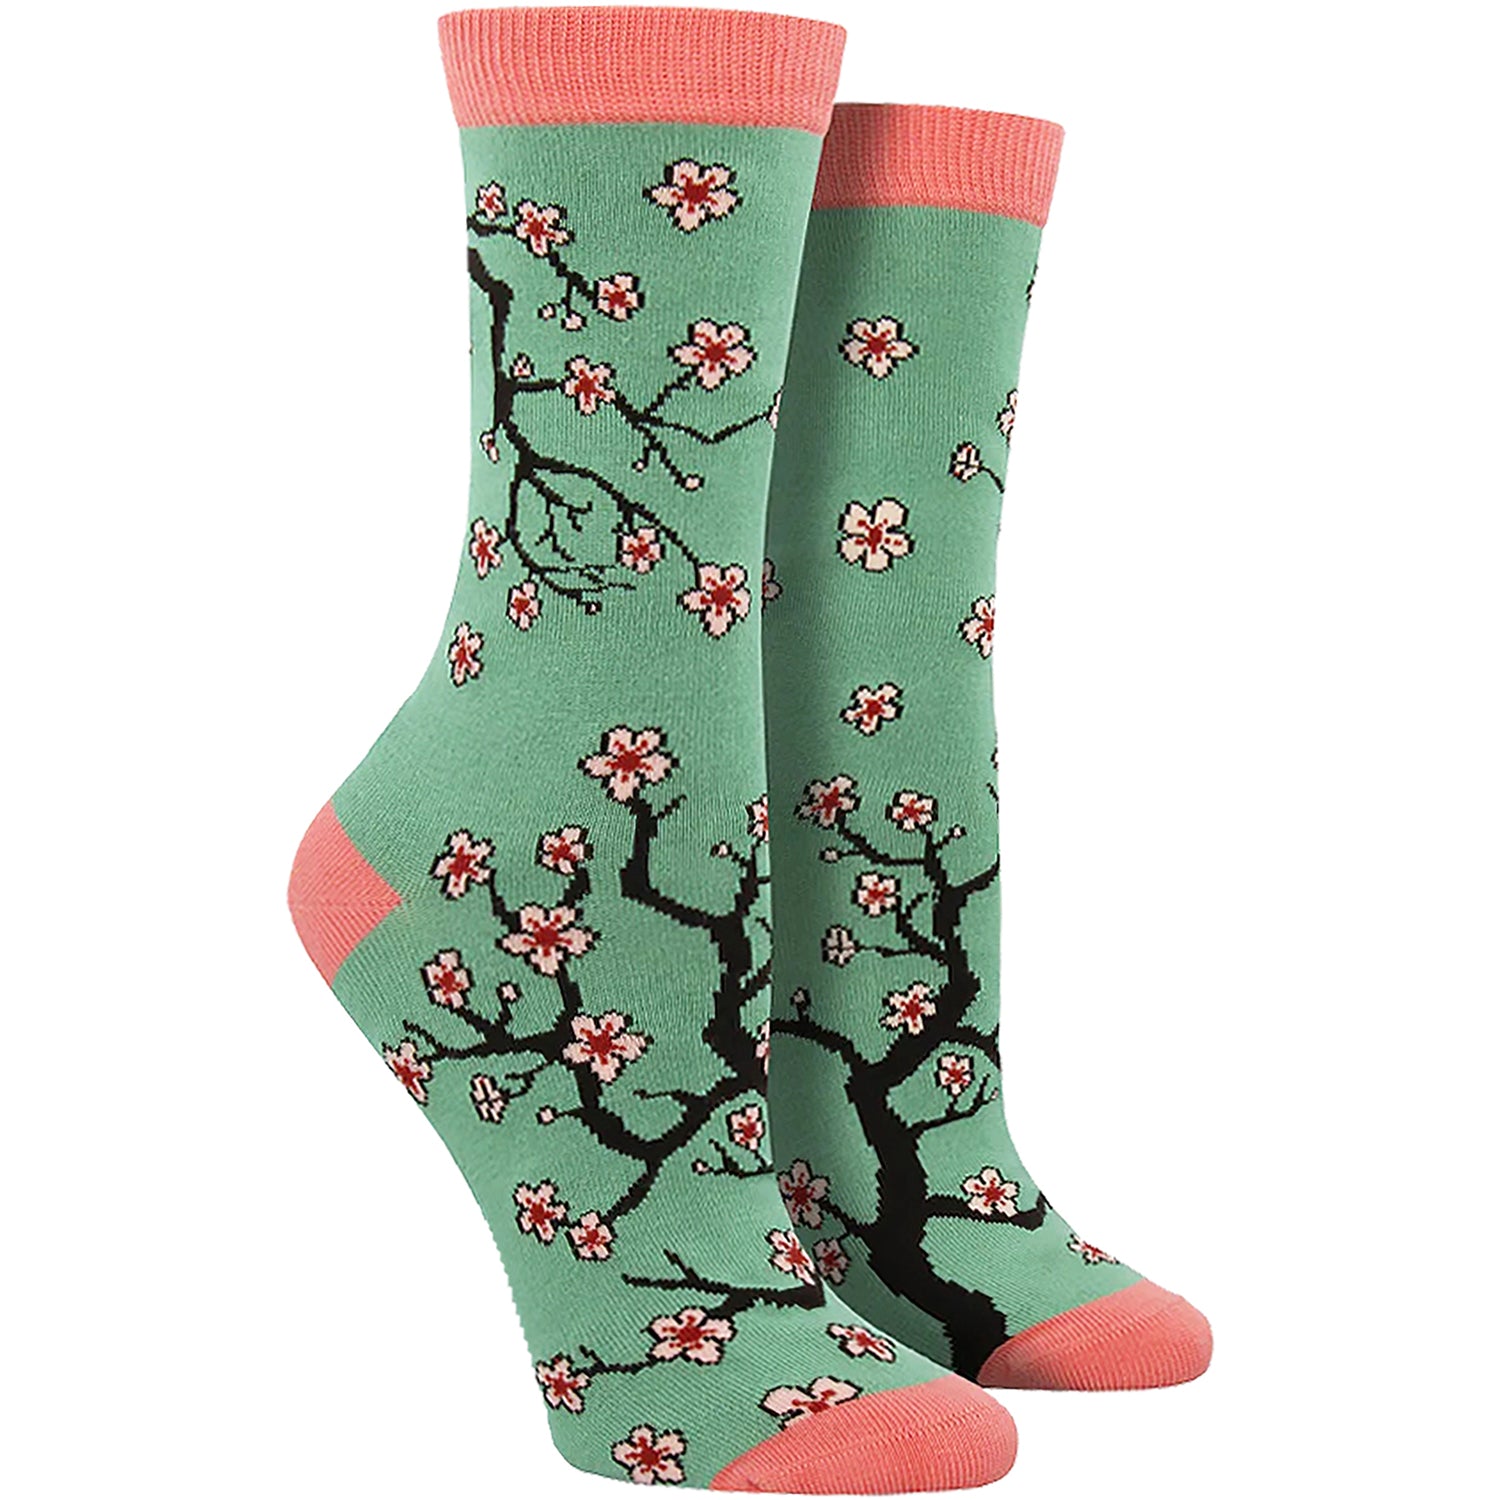 Socksmith Bamboo Cherry Blossom Novelty Socks Footwear Etc